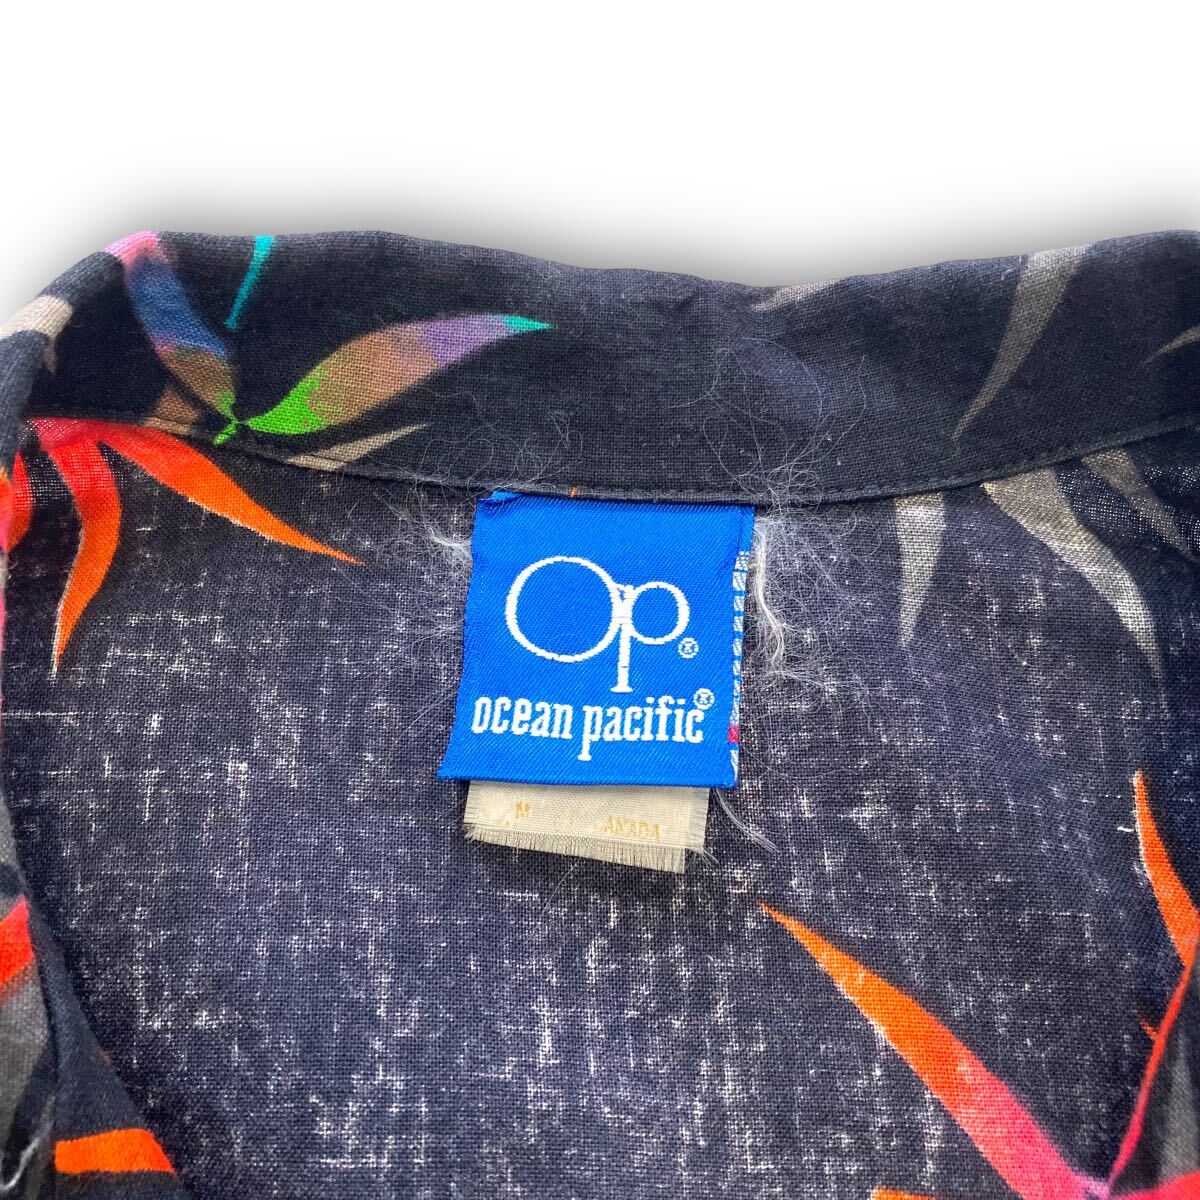 【Ocean pacific】Op 80s オーシャンパシフィック 竹レインボー柄 オープンカラーシャツ アロハシャツ カナダ製 ヴィンテージ 半袖シャツ 